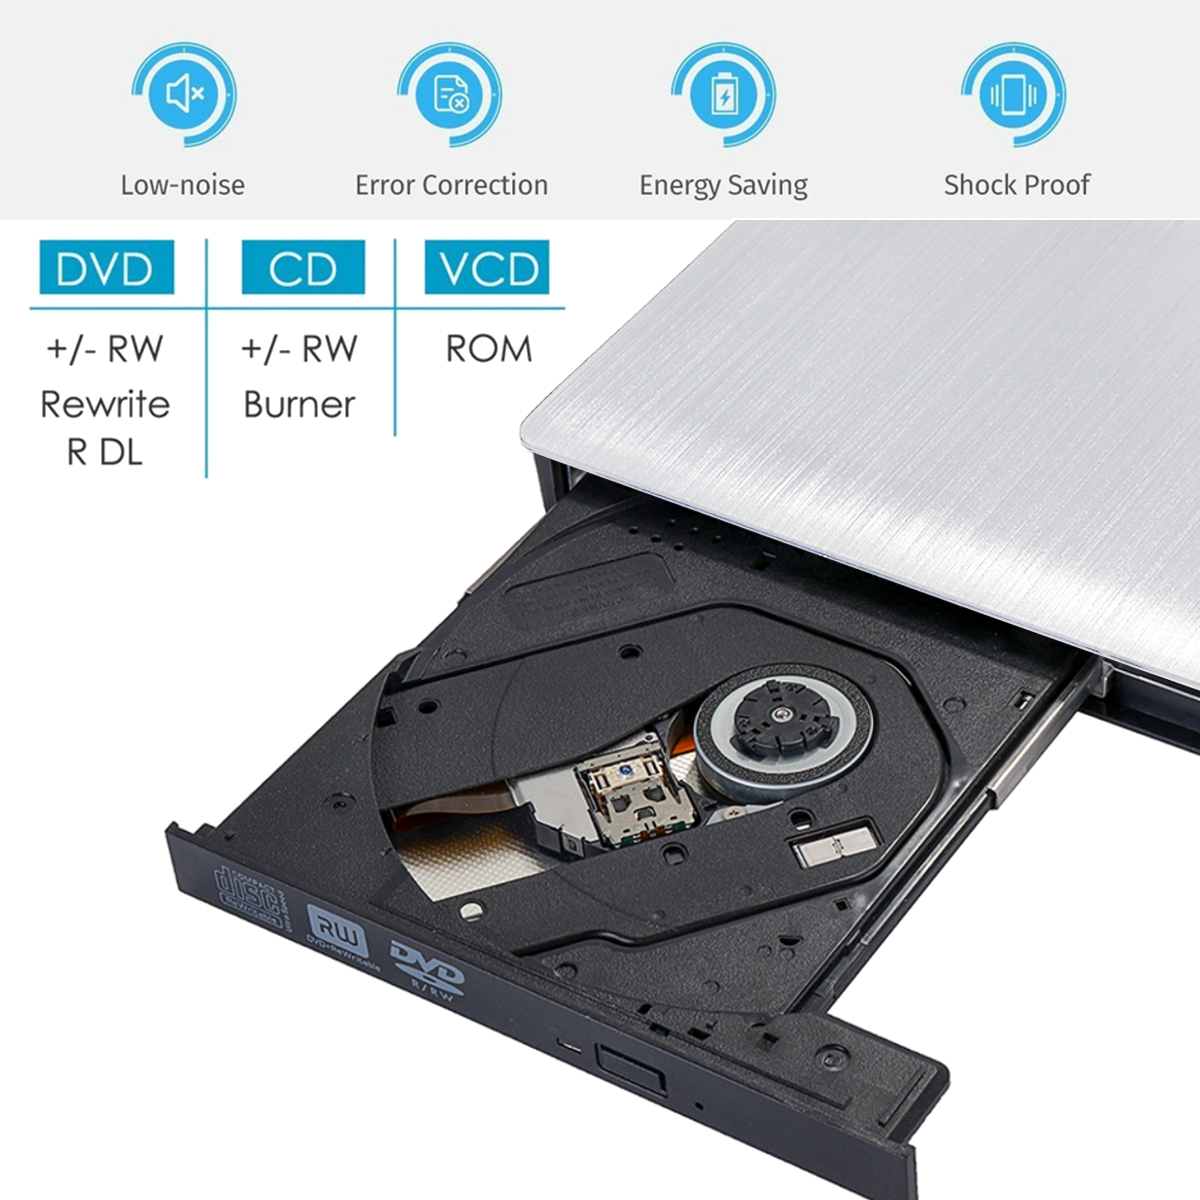 USB 3.0 Slim External DVD Optical Drive DVD-RW CD-RW Combo Drive Burner Reader Player 41